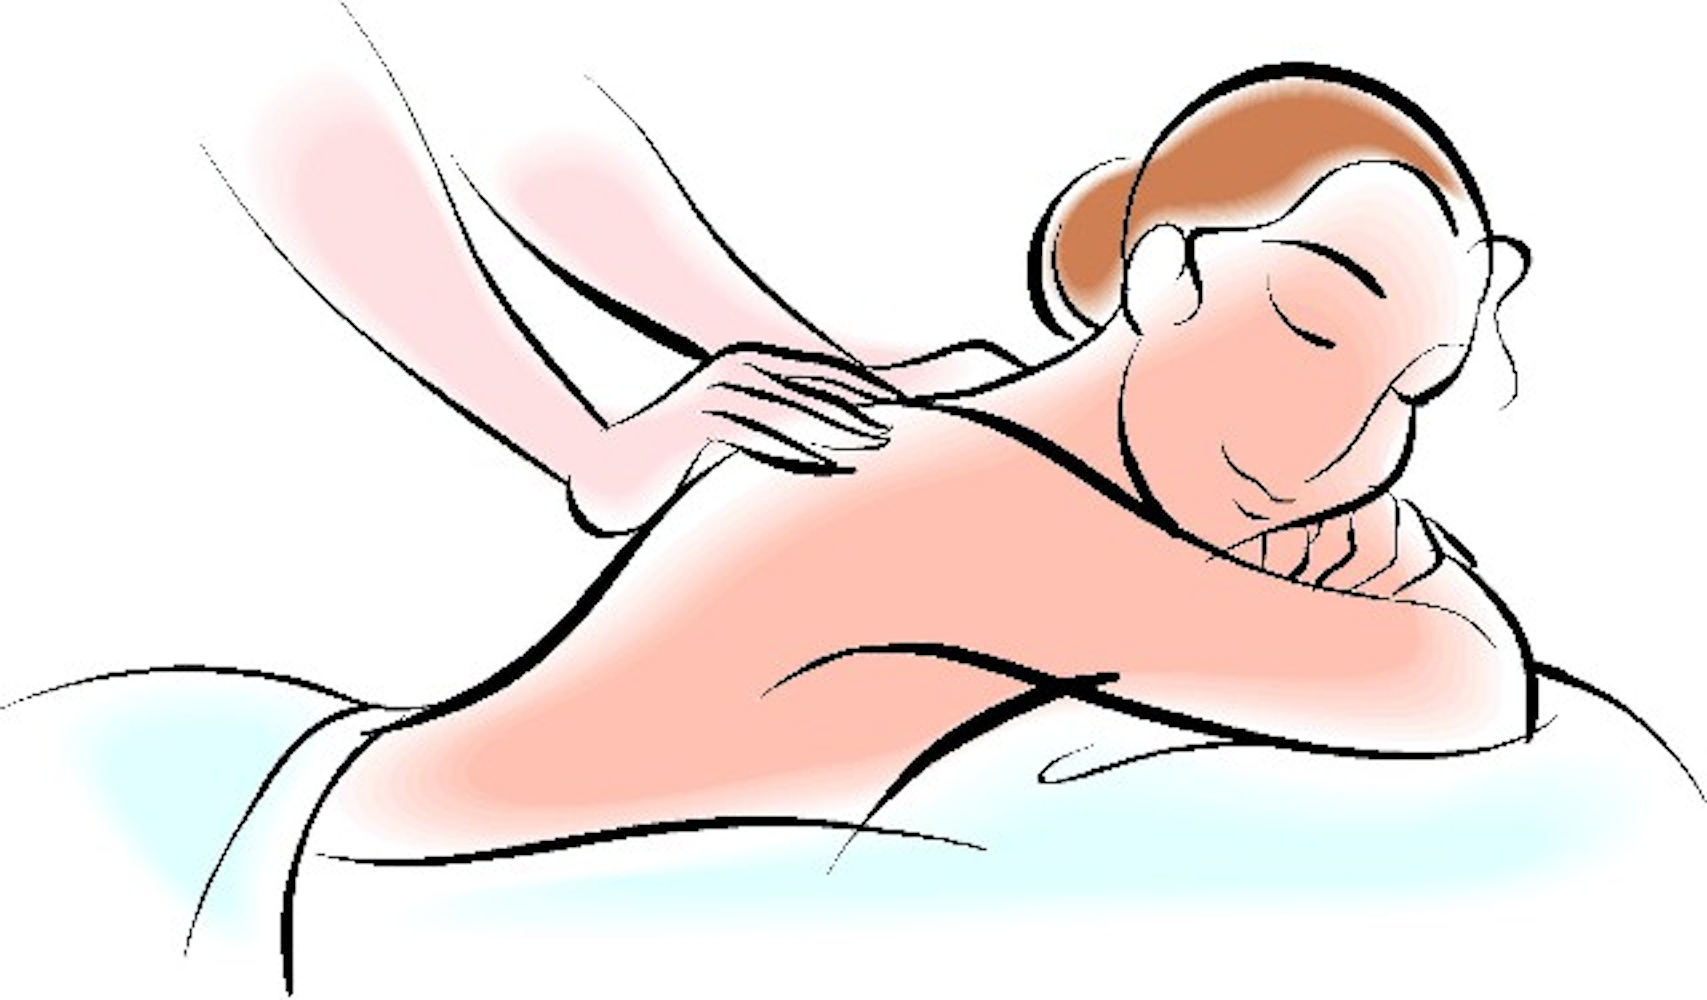 Massage Clipart | Free Download Clip Art | Free Clip Art | on ...